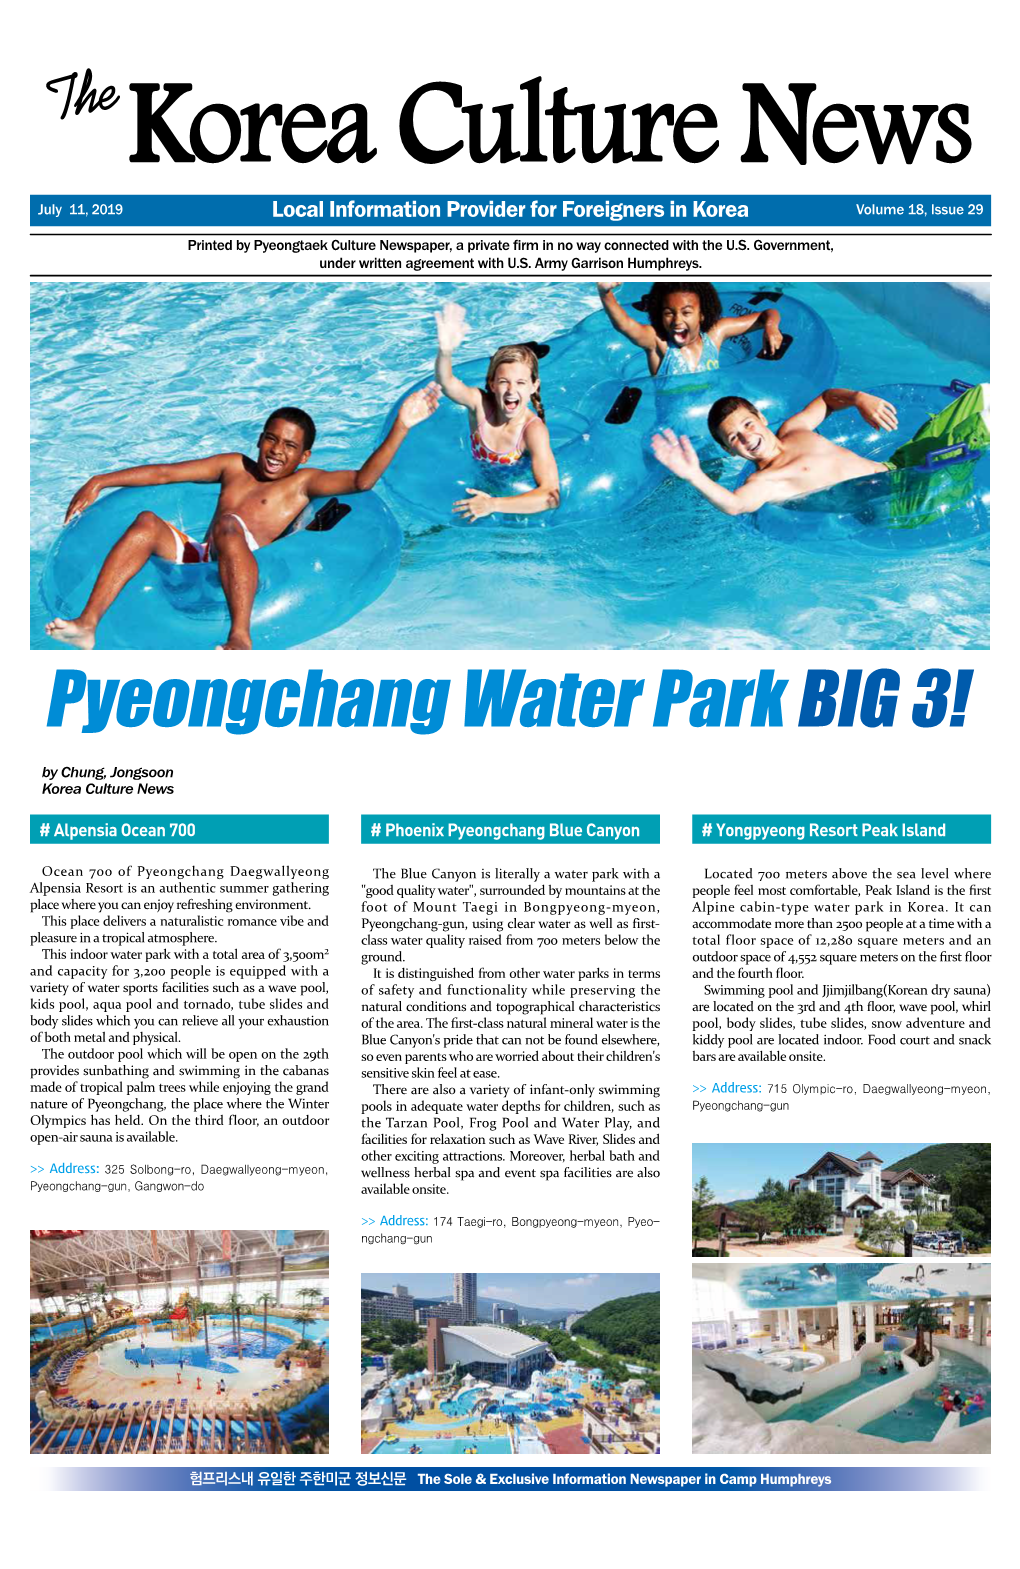 Pyeongchang Water Parkbig 3!